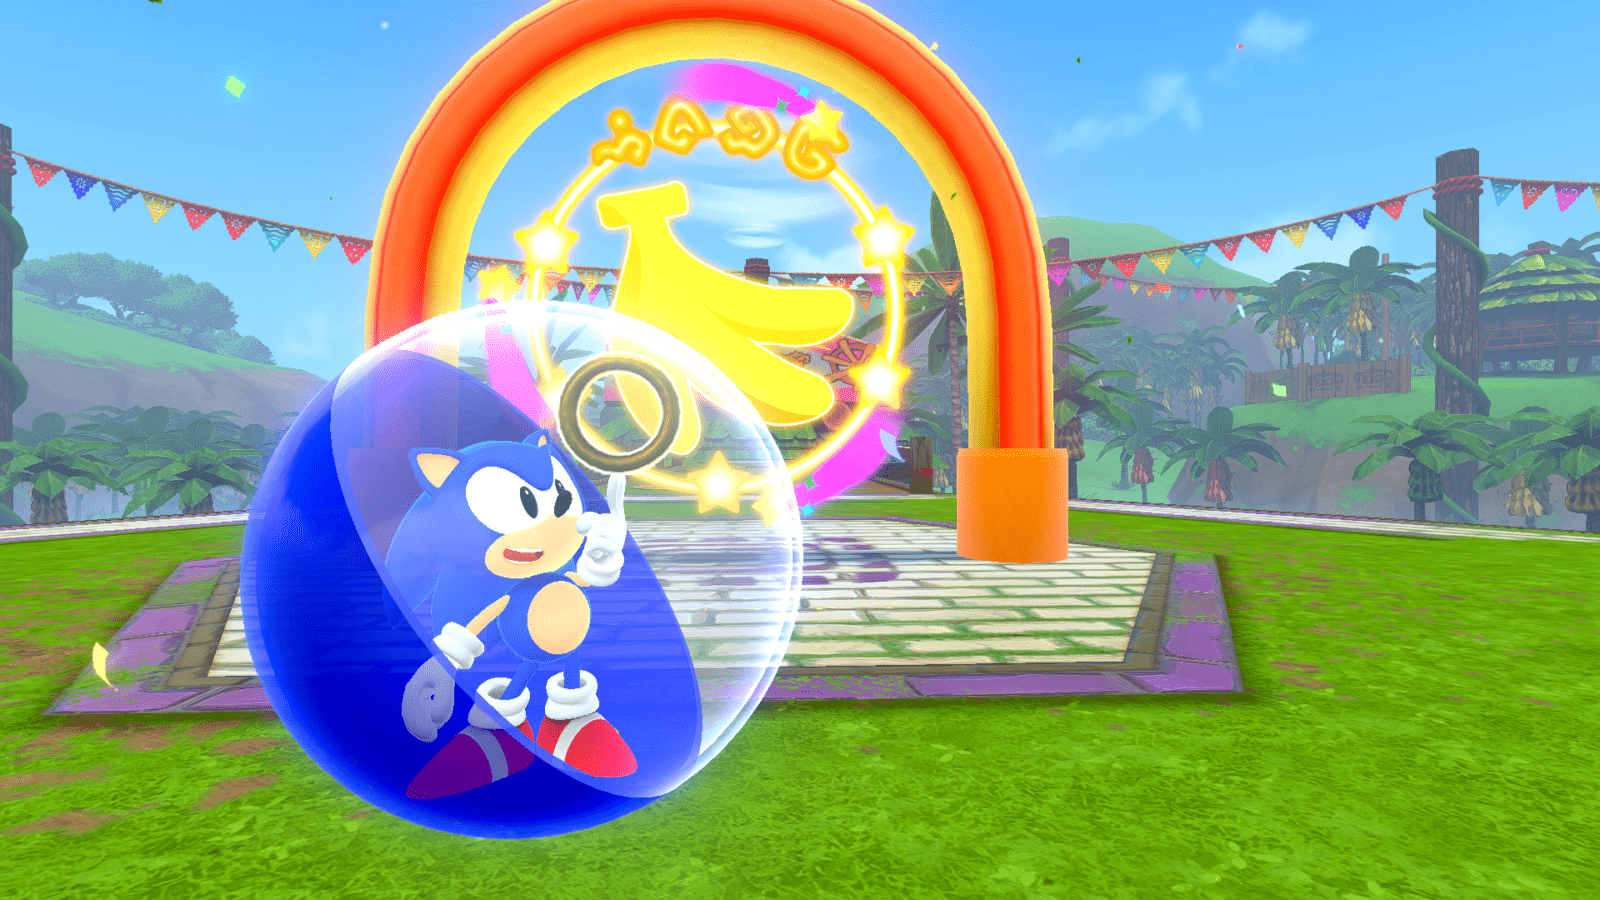 Sonic, Tales, Knuckles e Amy serão personagens jogáveis em Super Monkey Ball: Banana Rumble